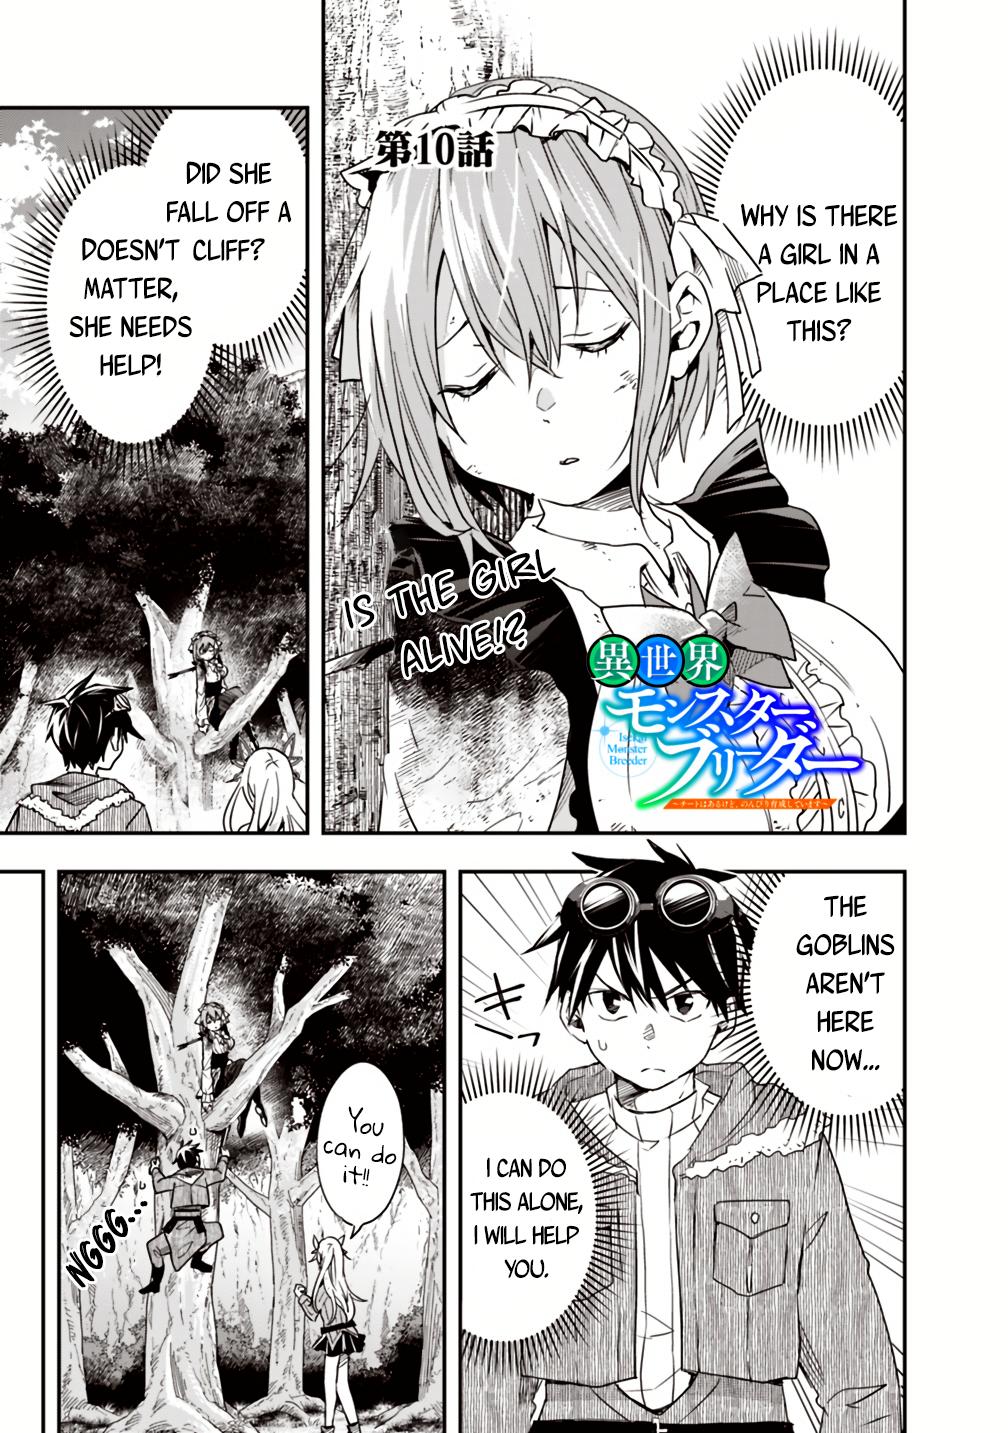 Read Isekai Monster Breeder Manga on Mangakakalot